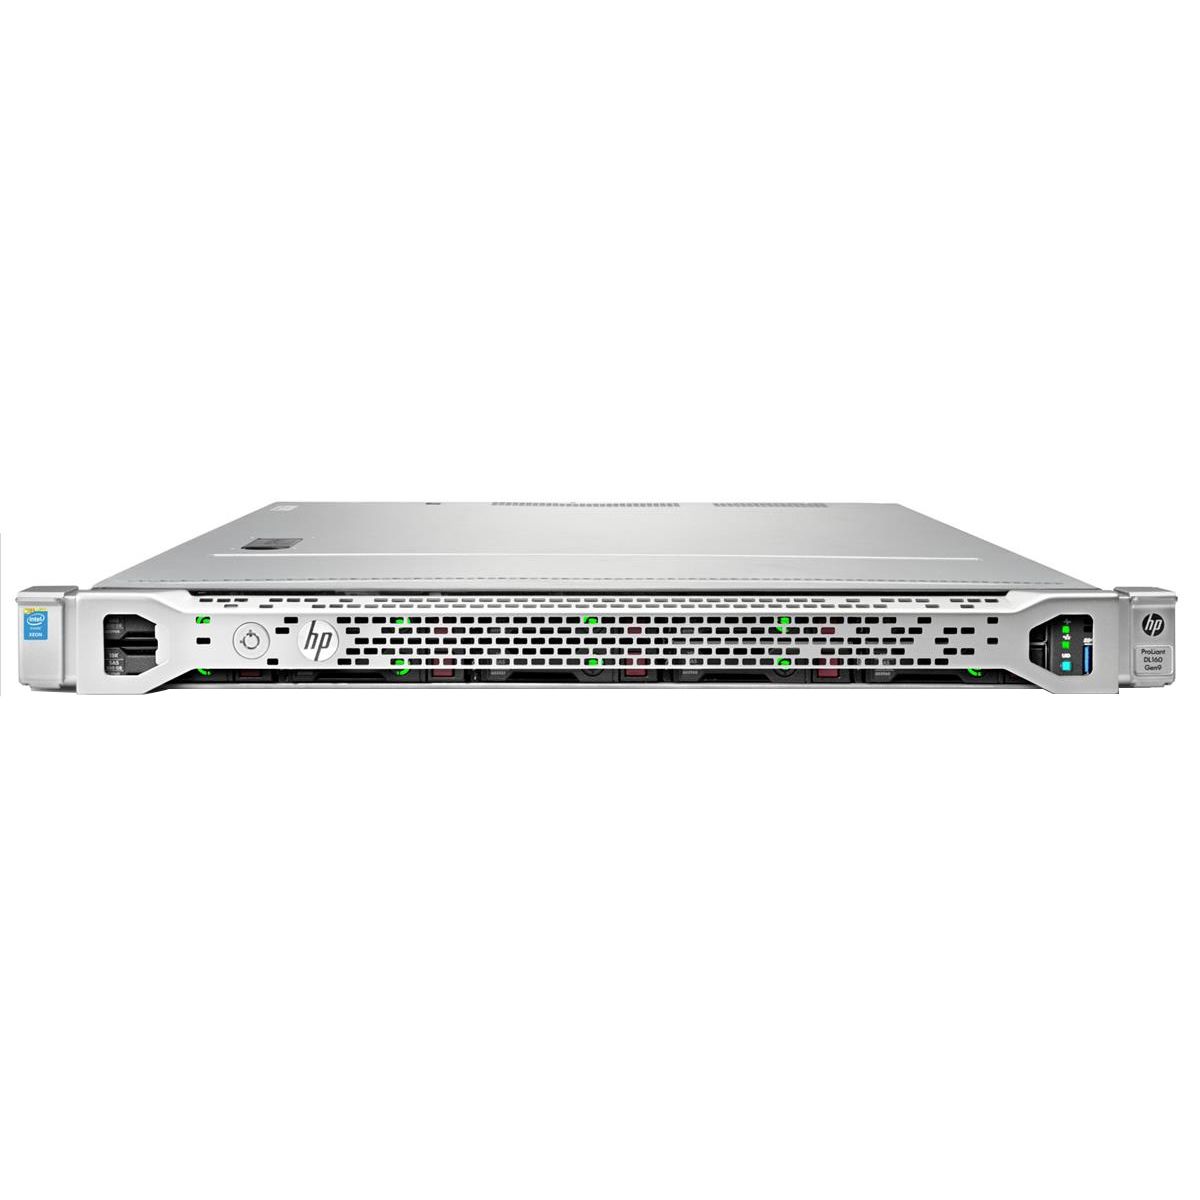  Dedicated server HP DL160 Gen9 4LFF, 1 x E5-2620v4, 2 x 16GB 2Rx4 PC4-24000P-R,  1 x  900W